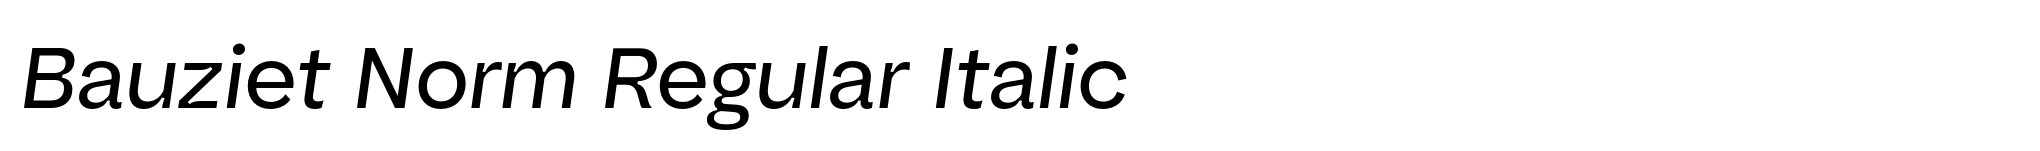 Bauziet Norm Regular Italic image